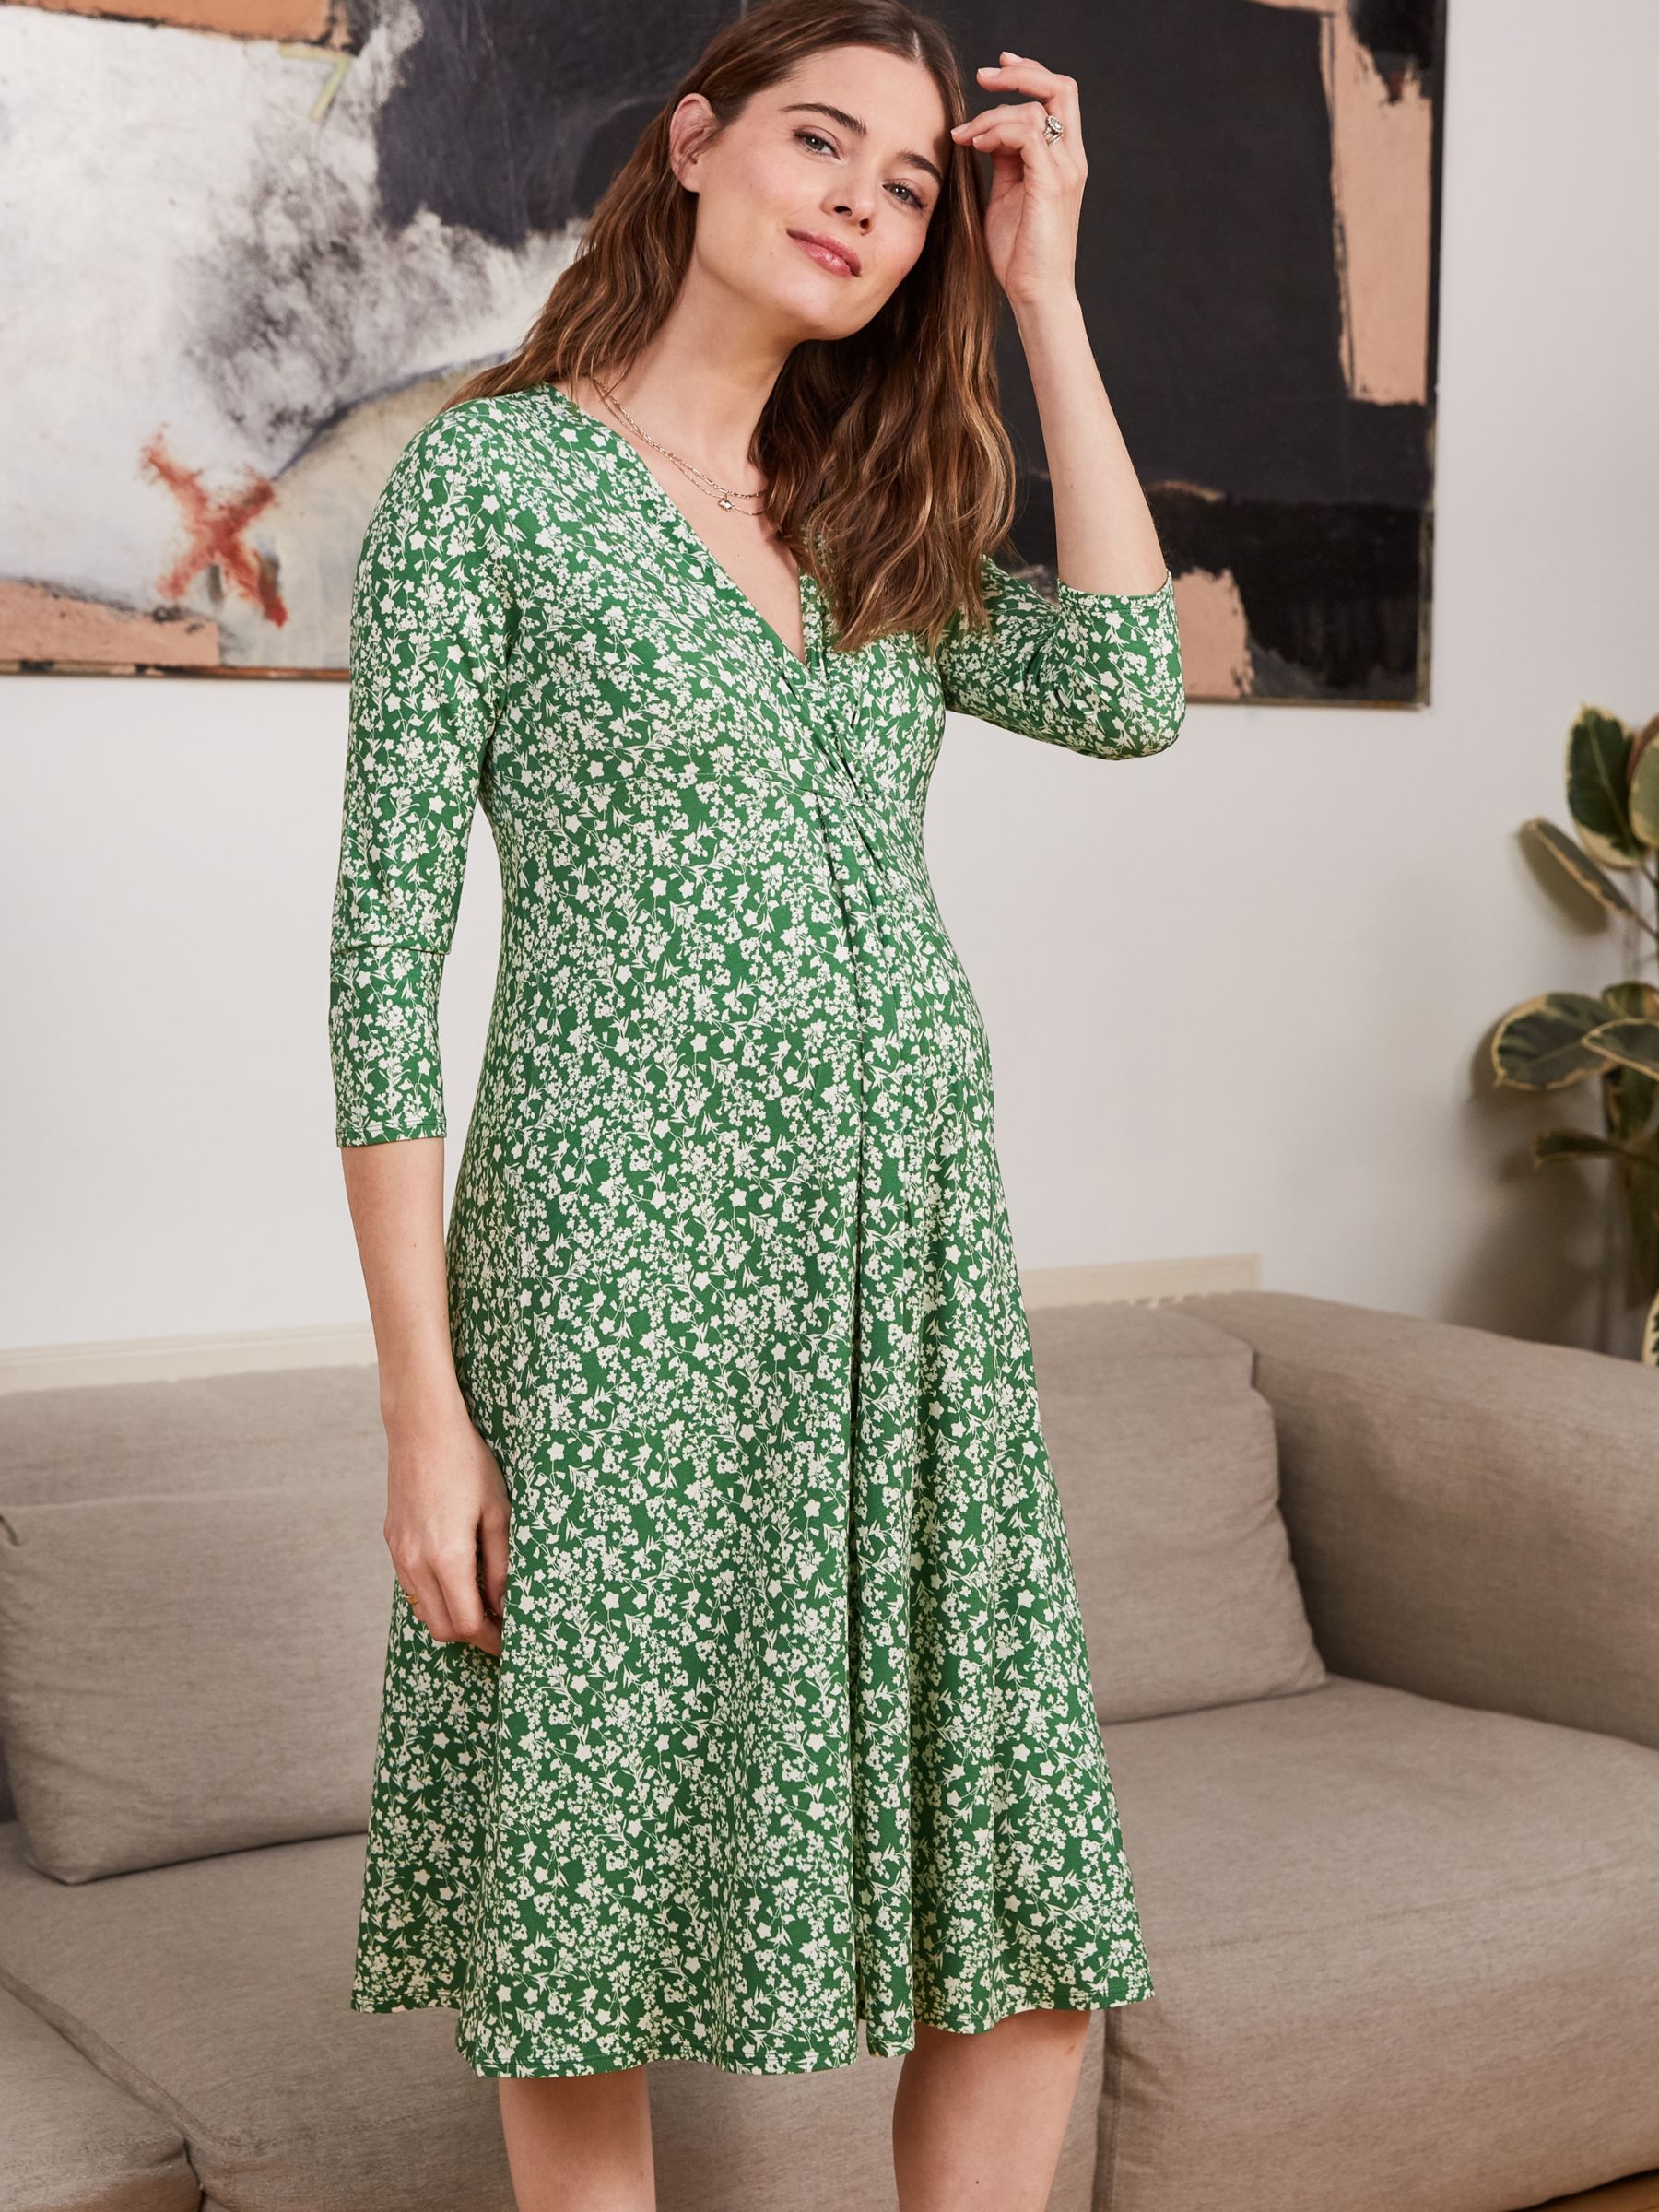 Isabella Oliver Mia Maternity Dress, Fern Green, 14